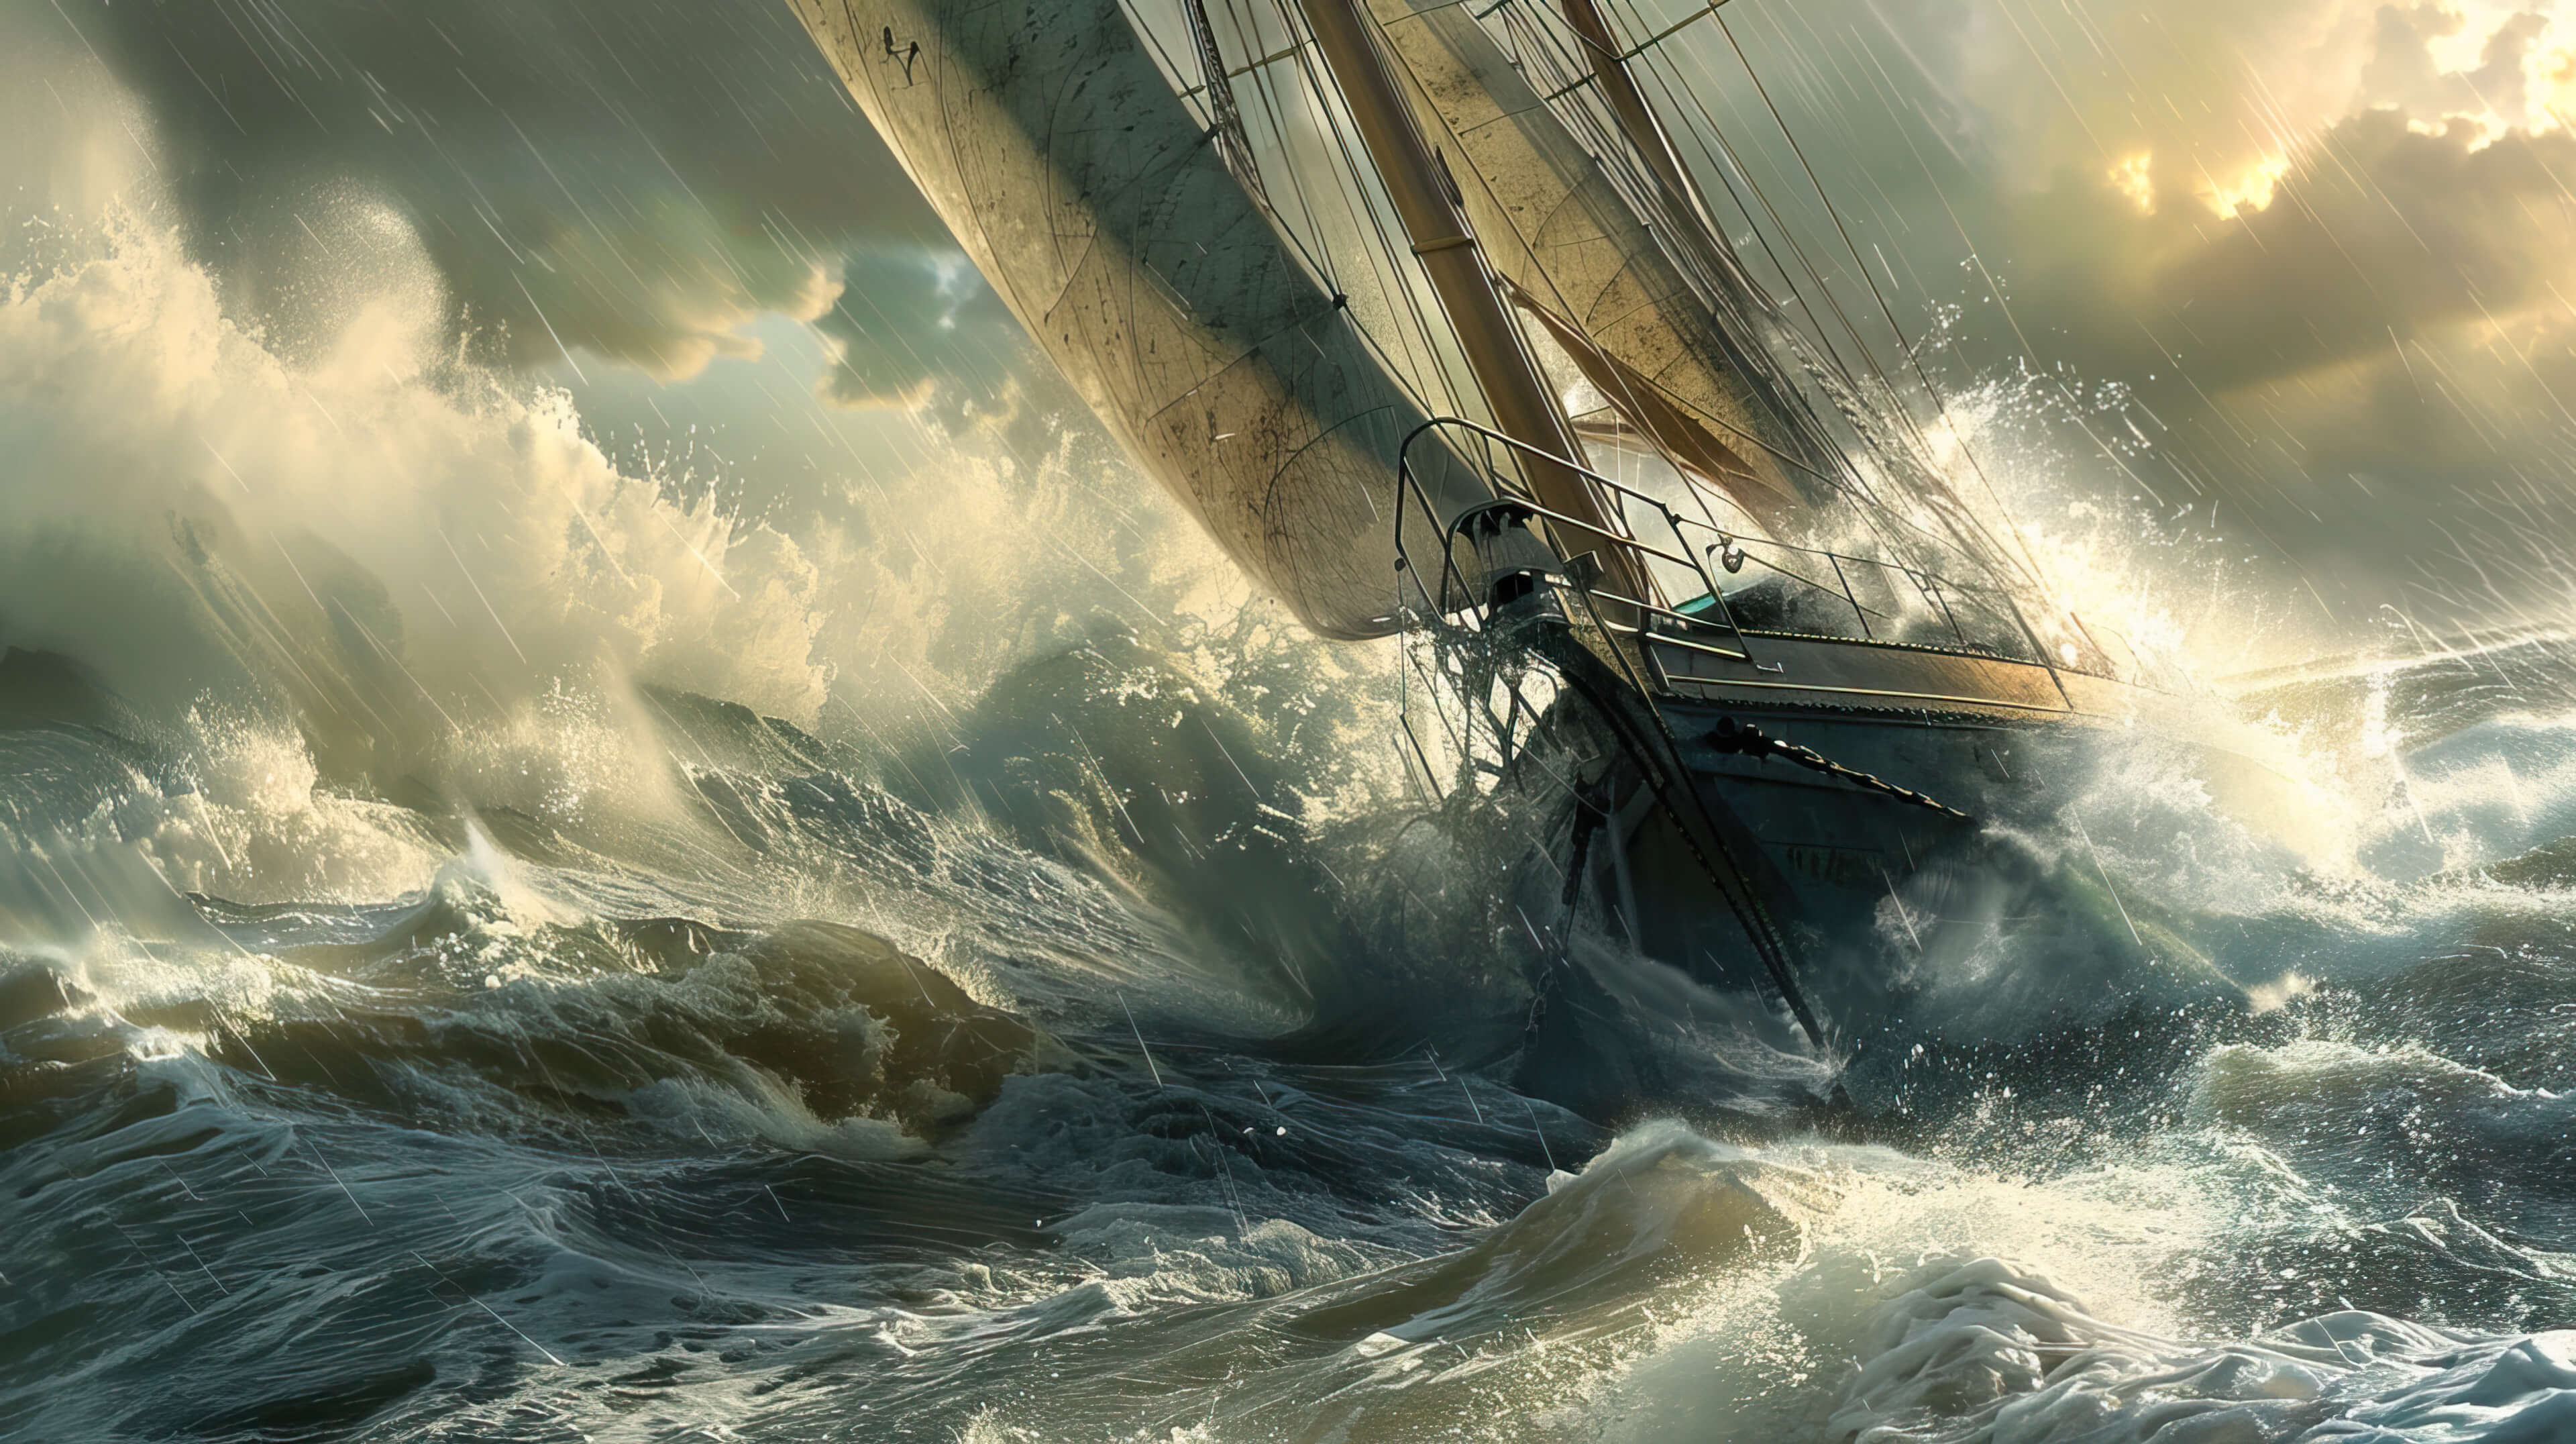 A dramatic wallpaper capturing a sailboat navigating turbulent seas with its crew battling crashing waves and fierce winds